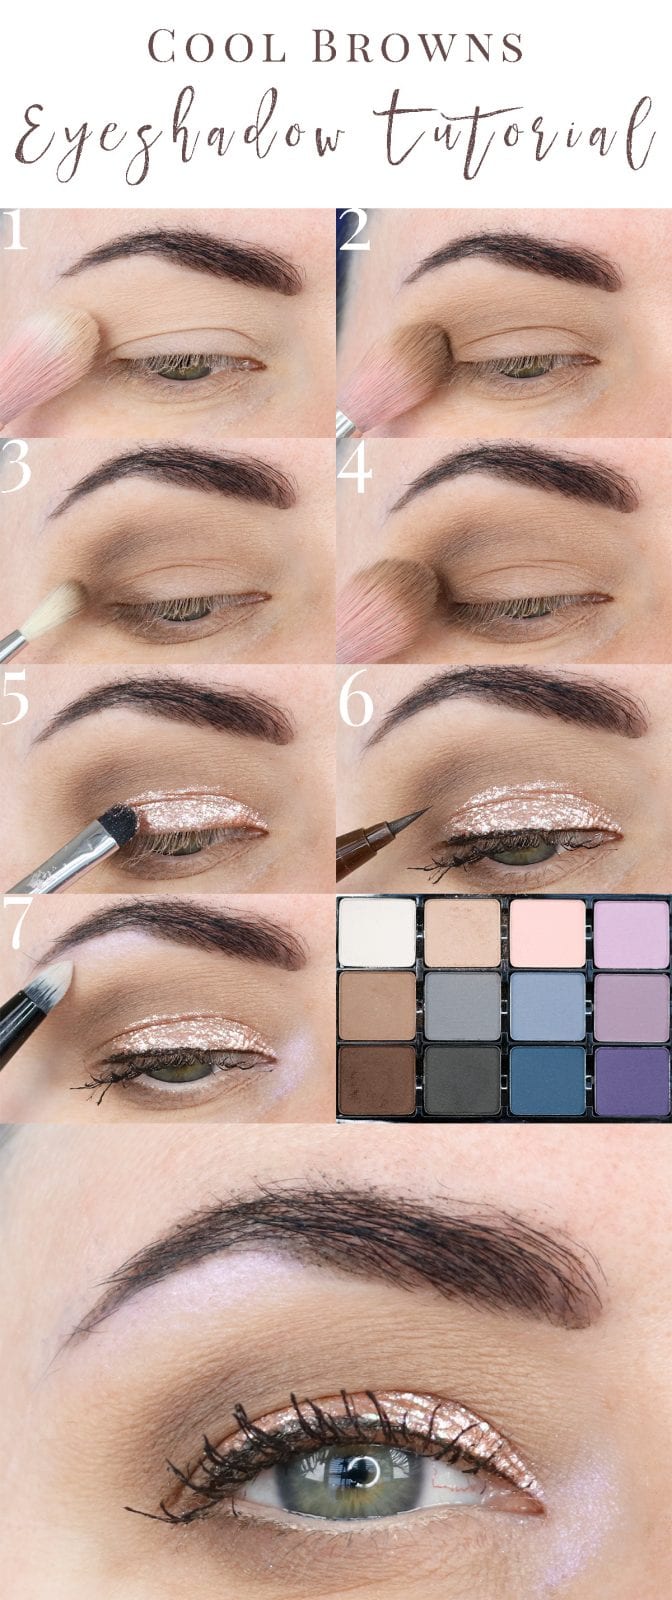 black and white eyeshadow tutorial